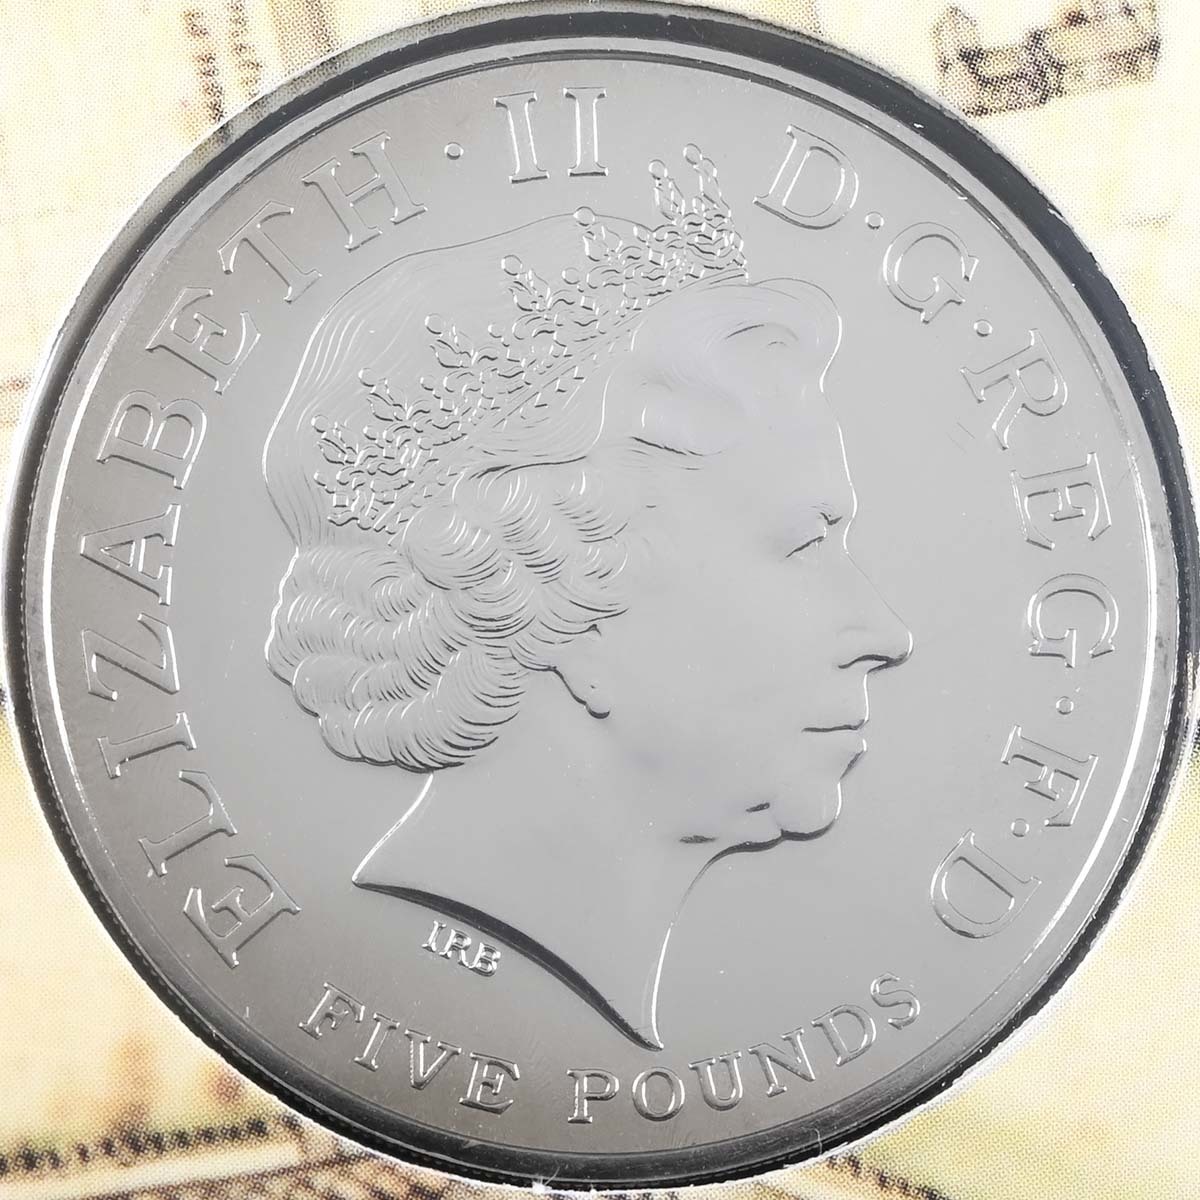 2008 Queen Elizabeth I Accession Anniversary Five Pound Crown Brilliant Uncirculated Coin In Folder Obverse